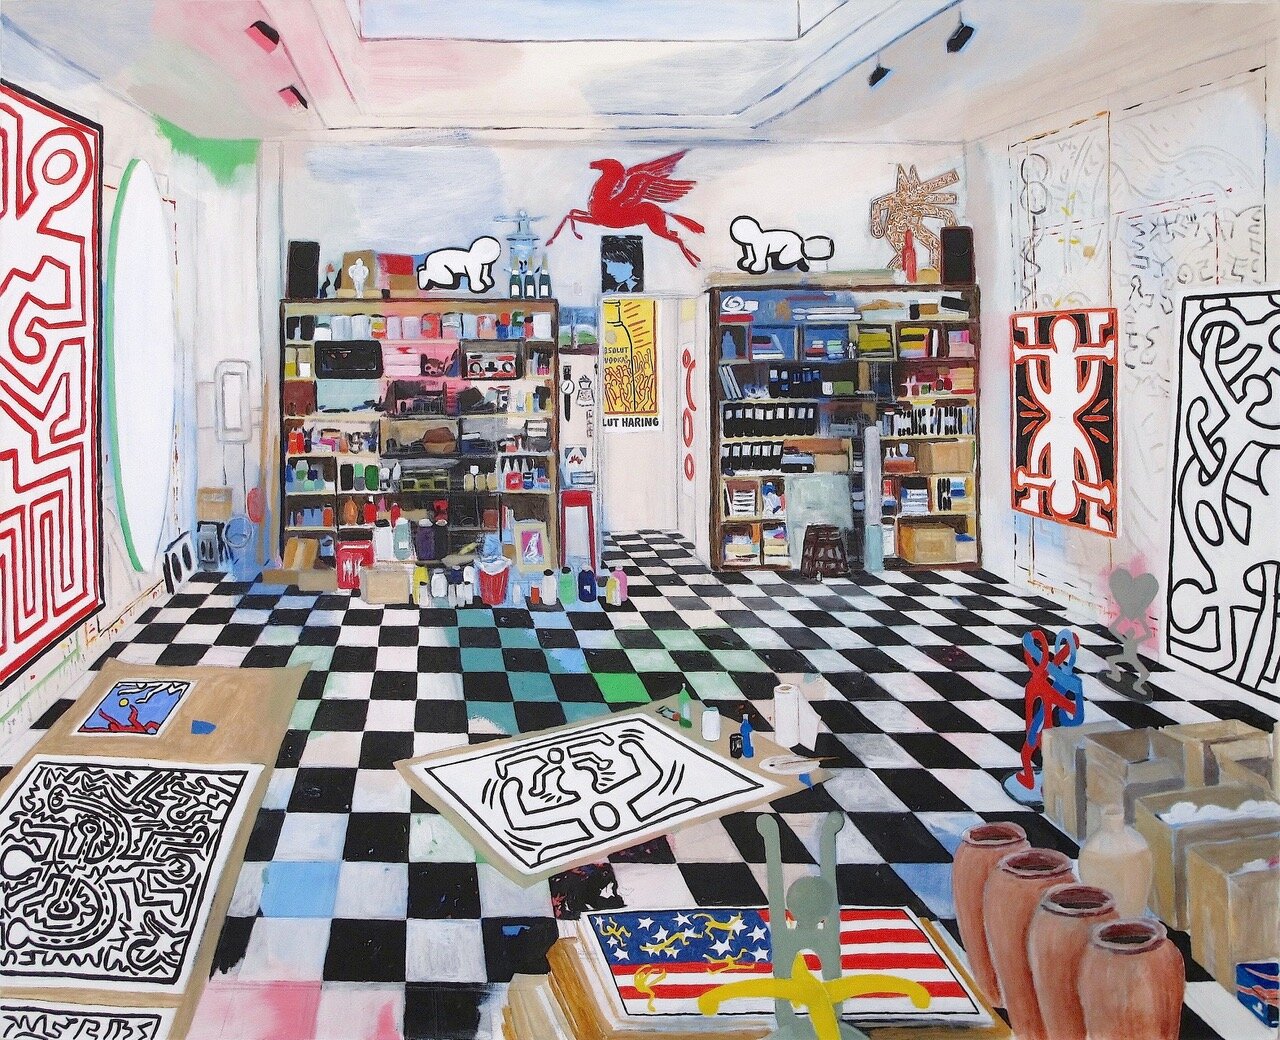  Keith Haring's Studio, 2016 (PRINT IN SHOP)  